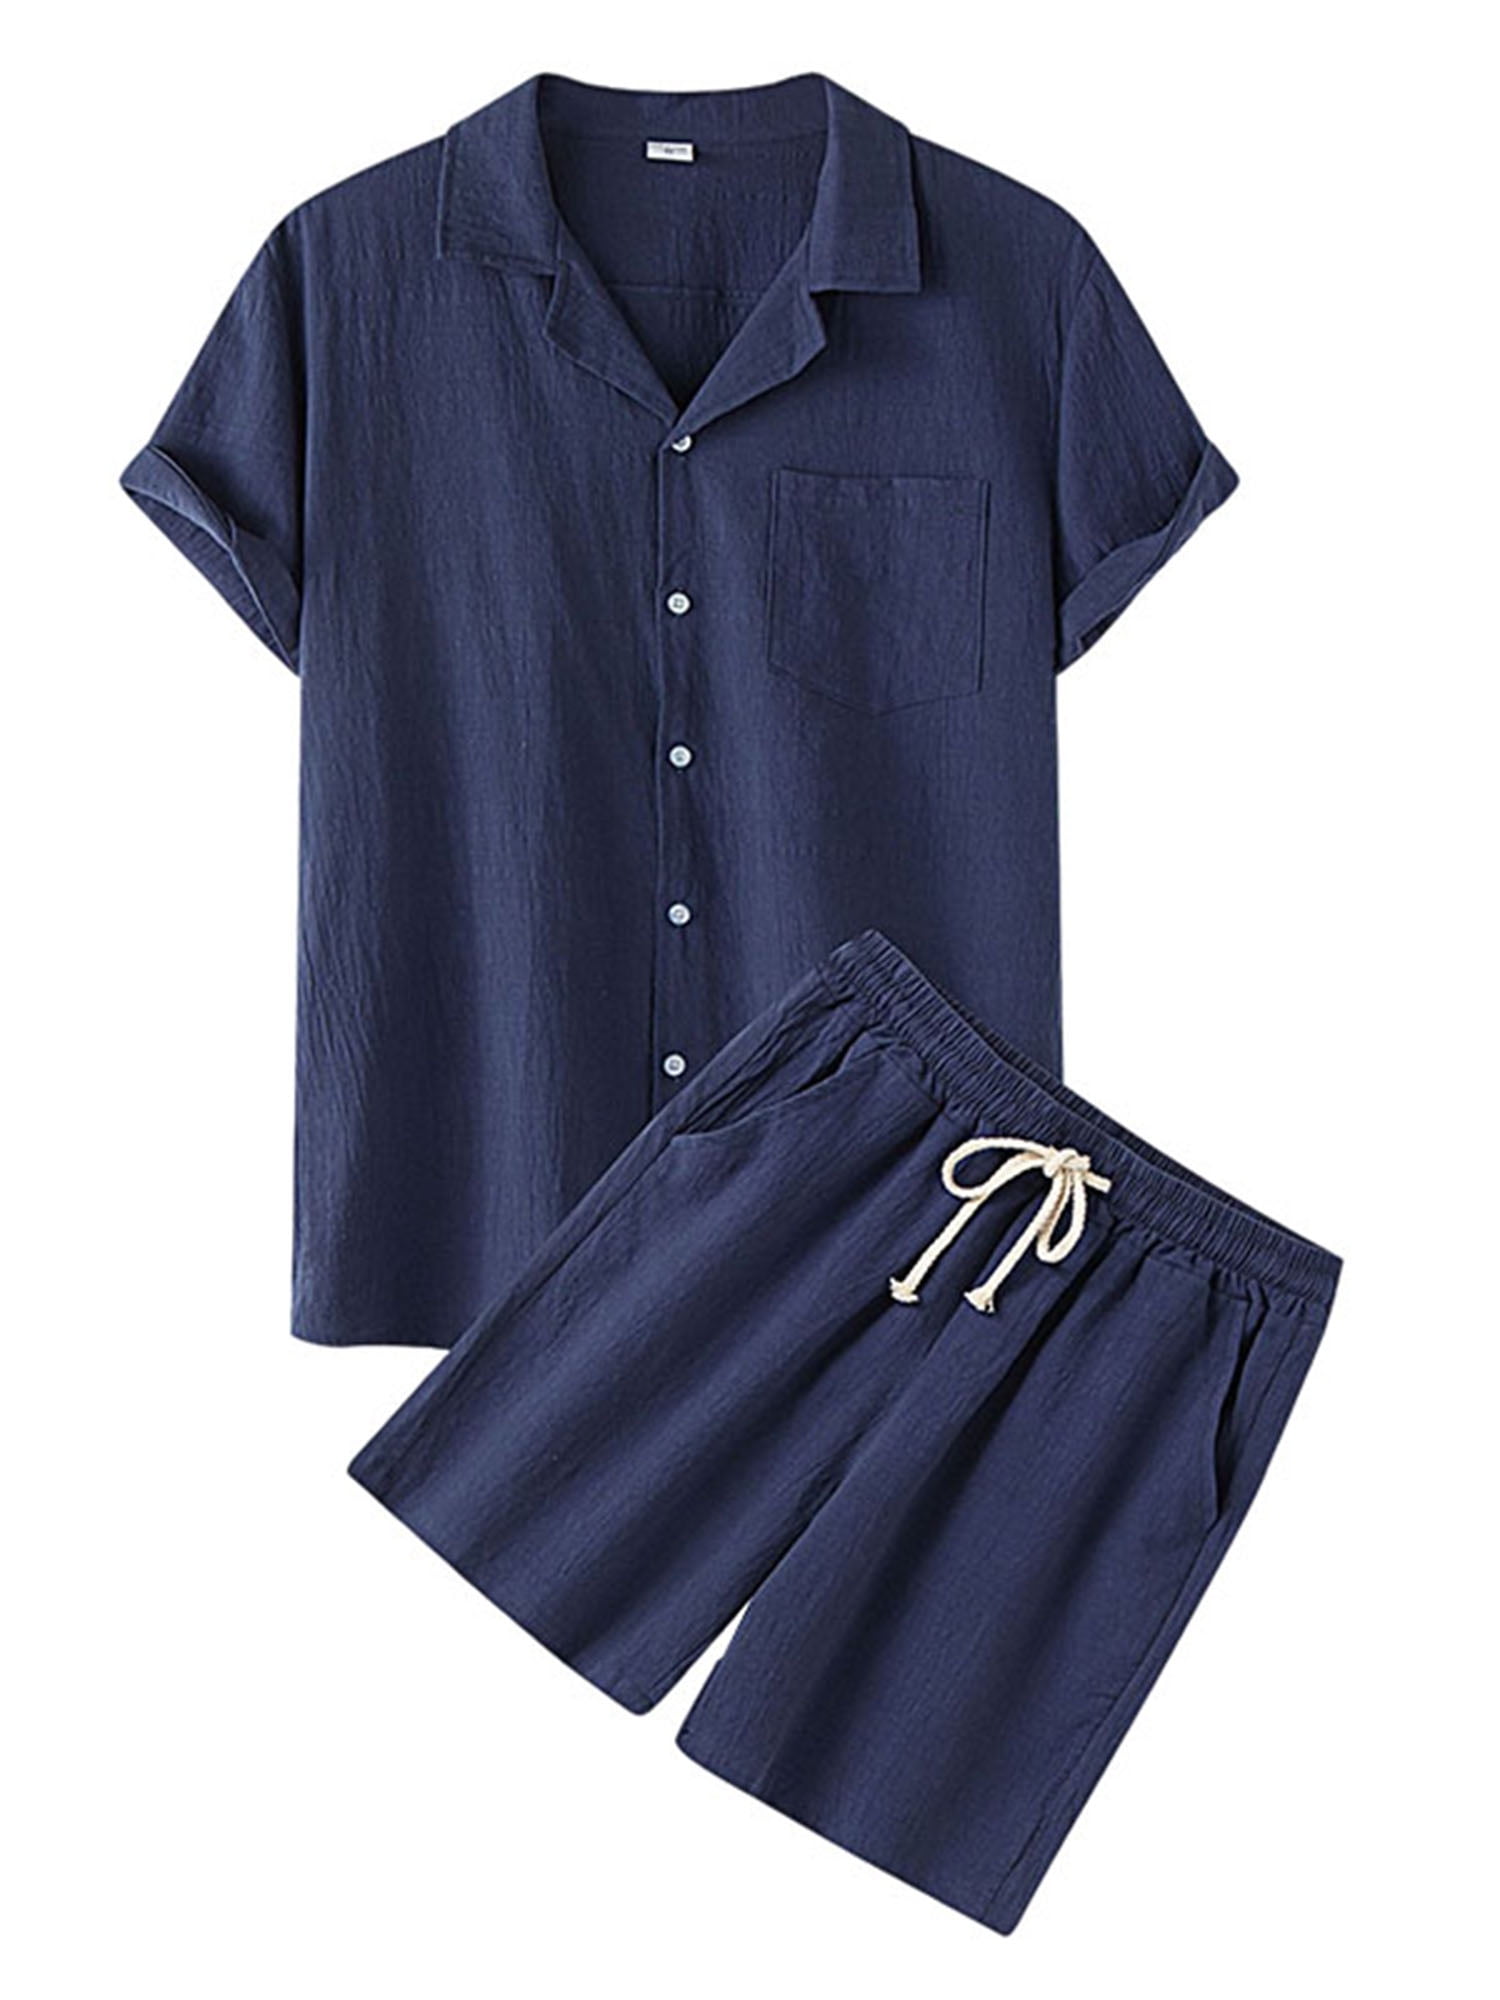 Avamo Men Solid Color Tops and Shorts Pajamas Set Sleep Joggers PJ Set ...